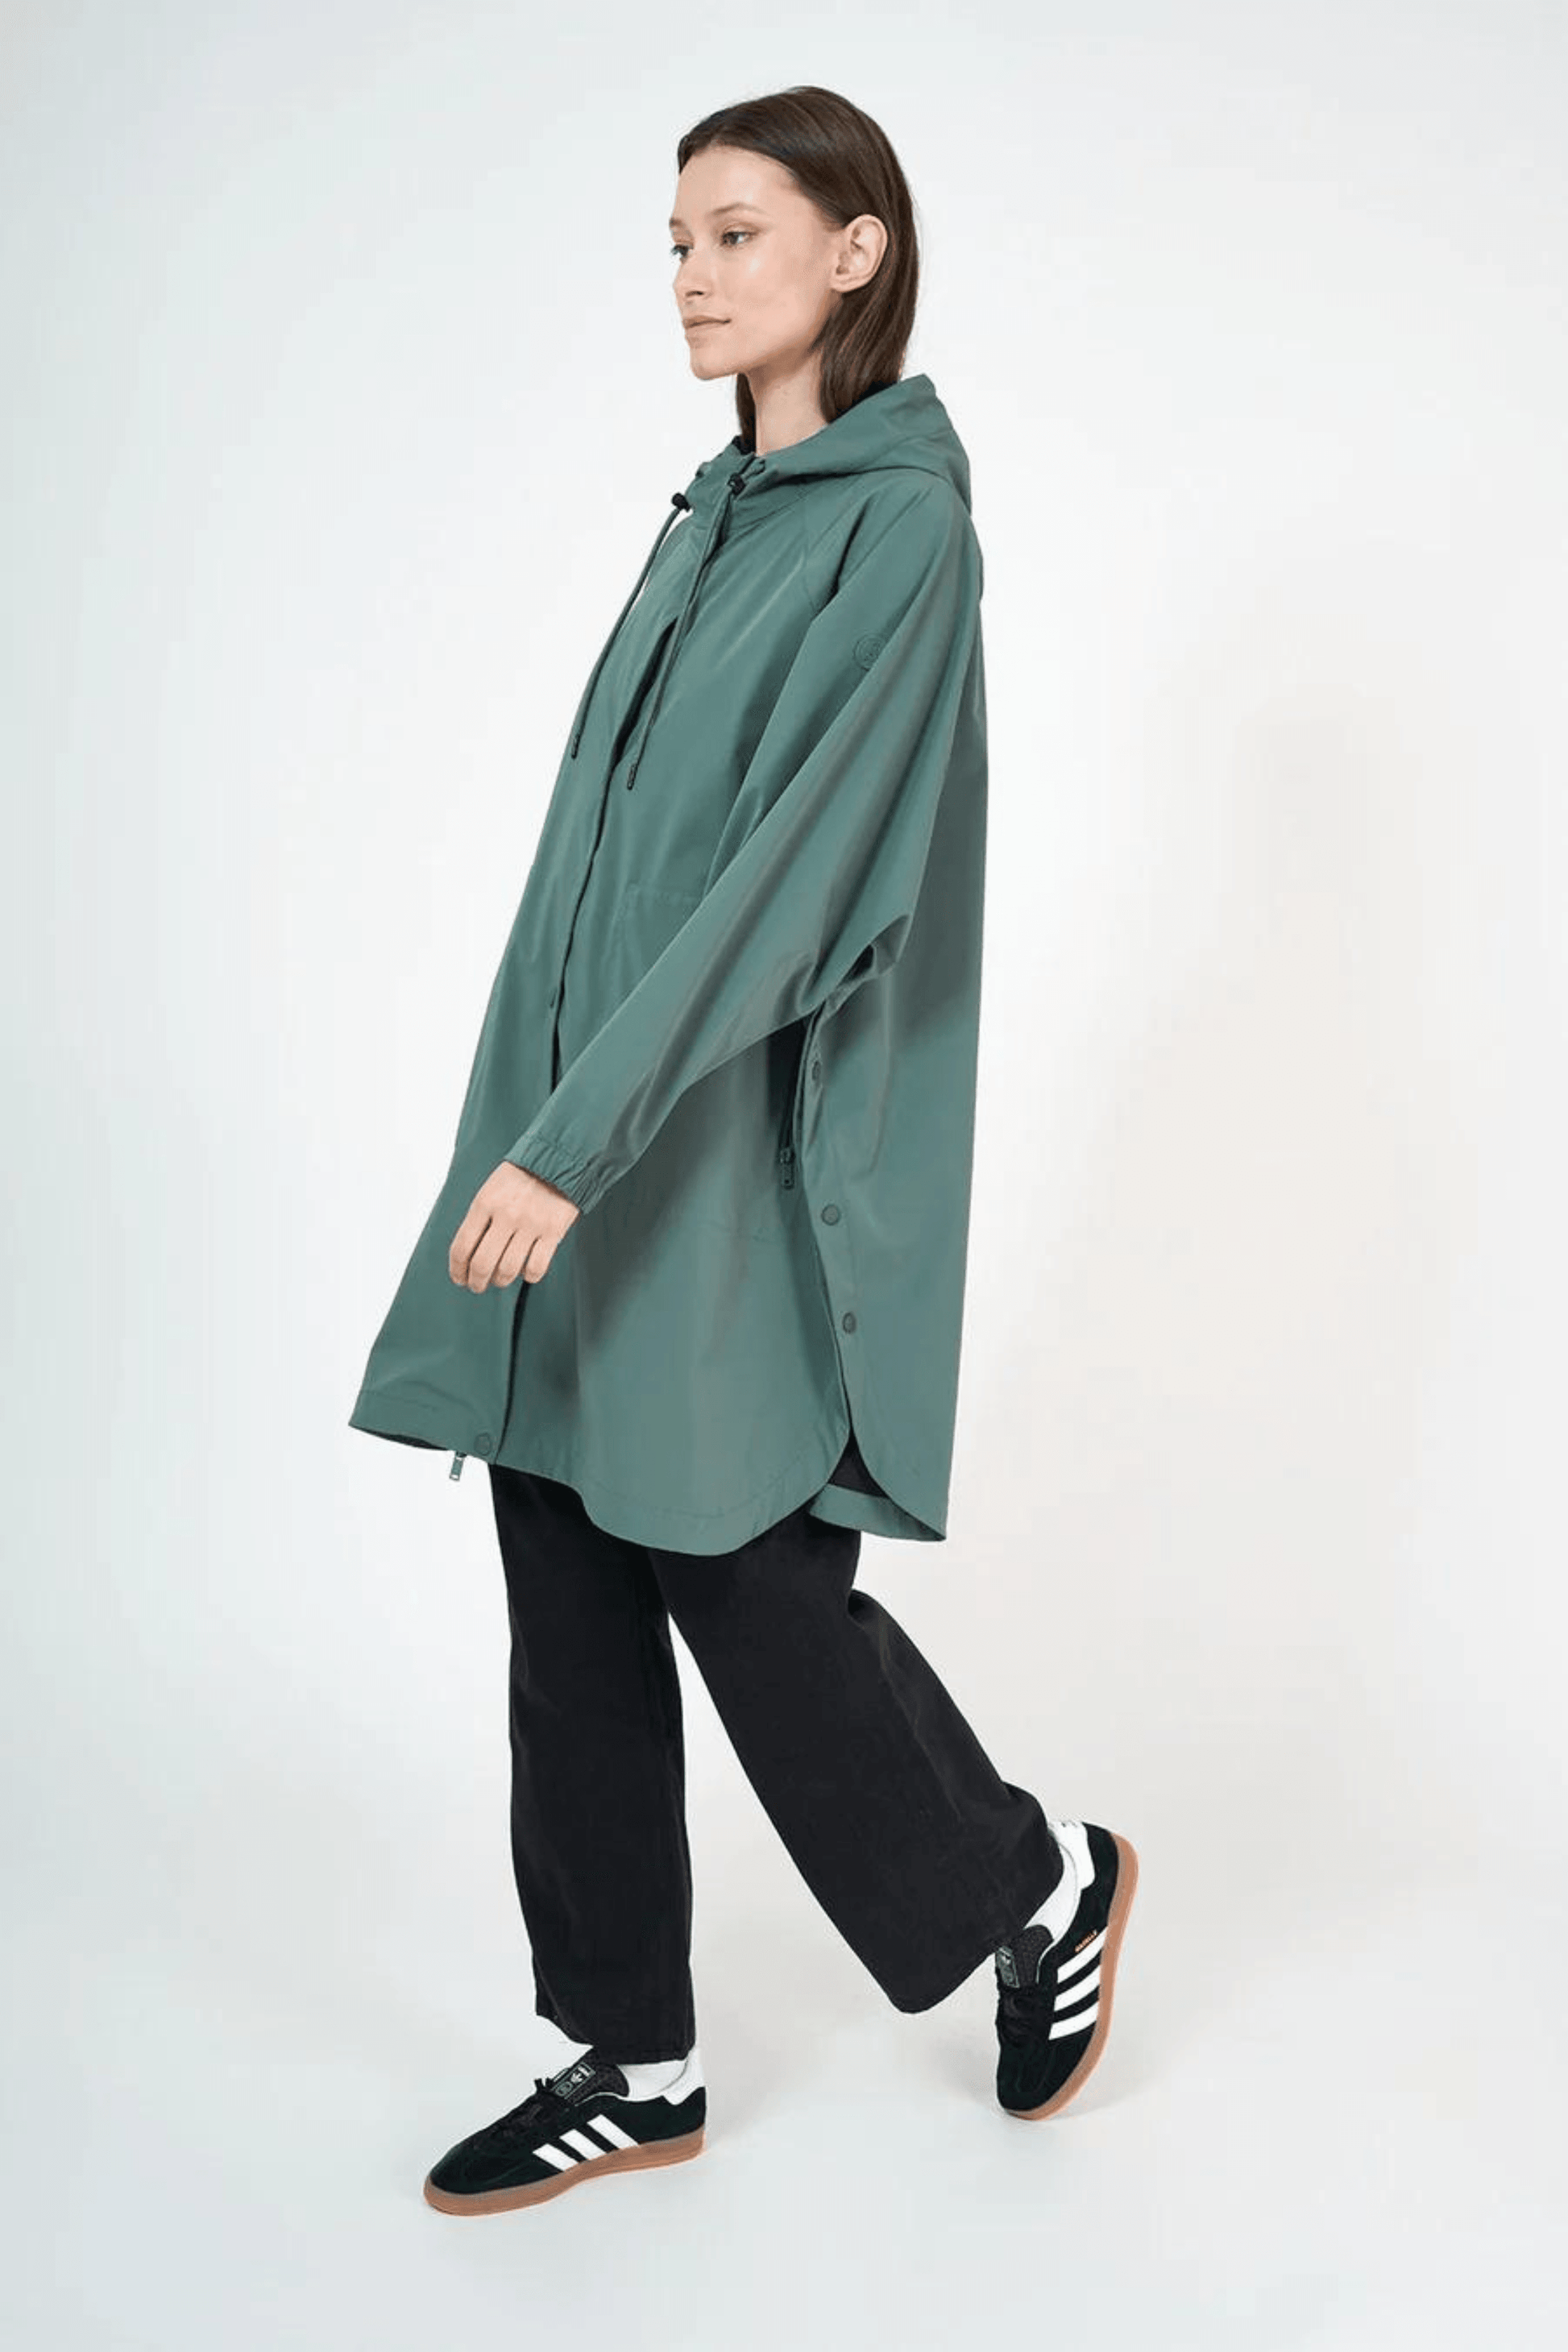 Tanta - Lejak Green Raincoat Poncho - Diamonds & Pearls